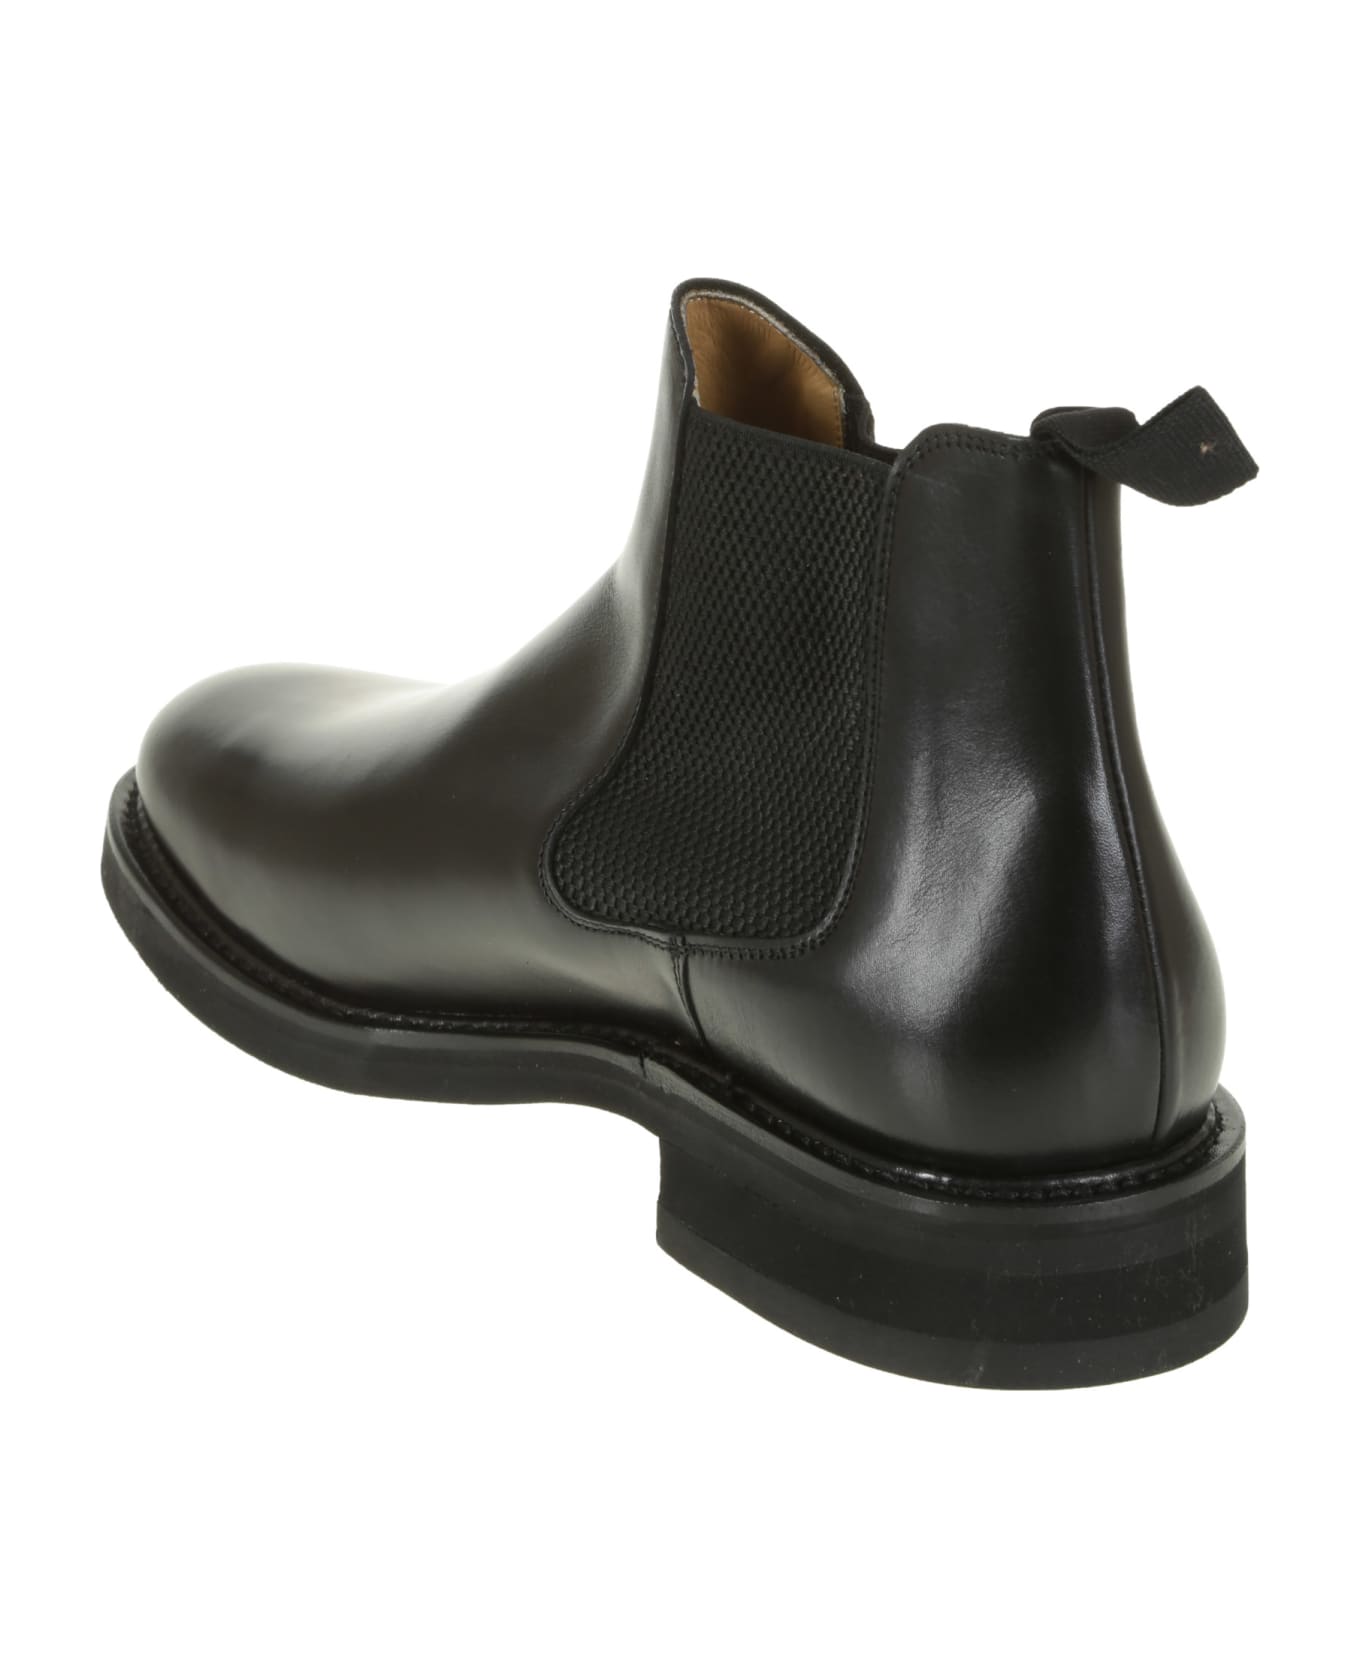 Berwick 1707 Boots - Black ブーツ